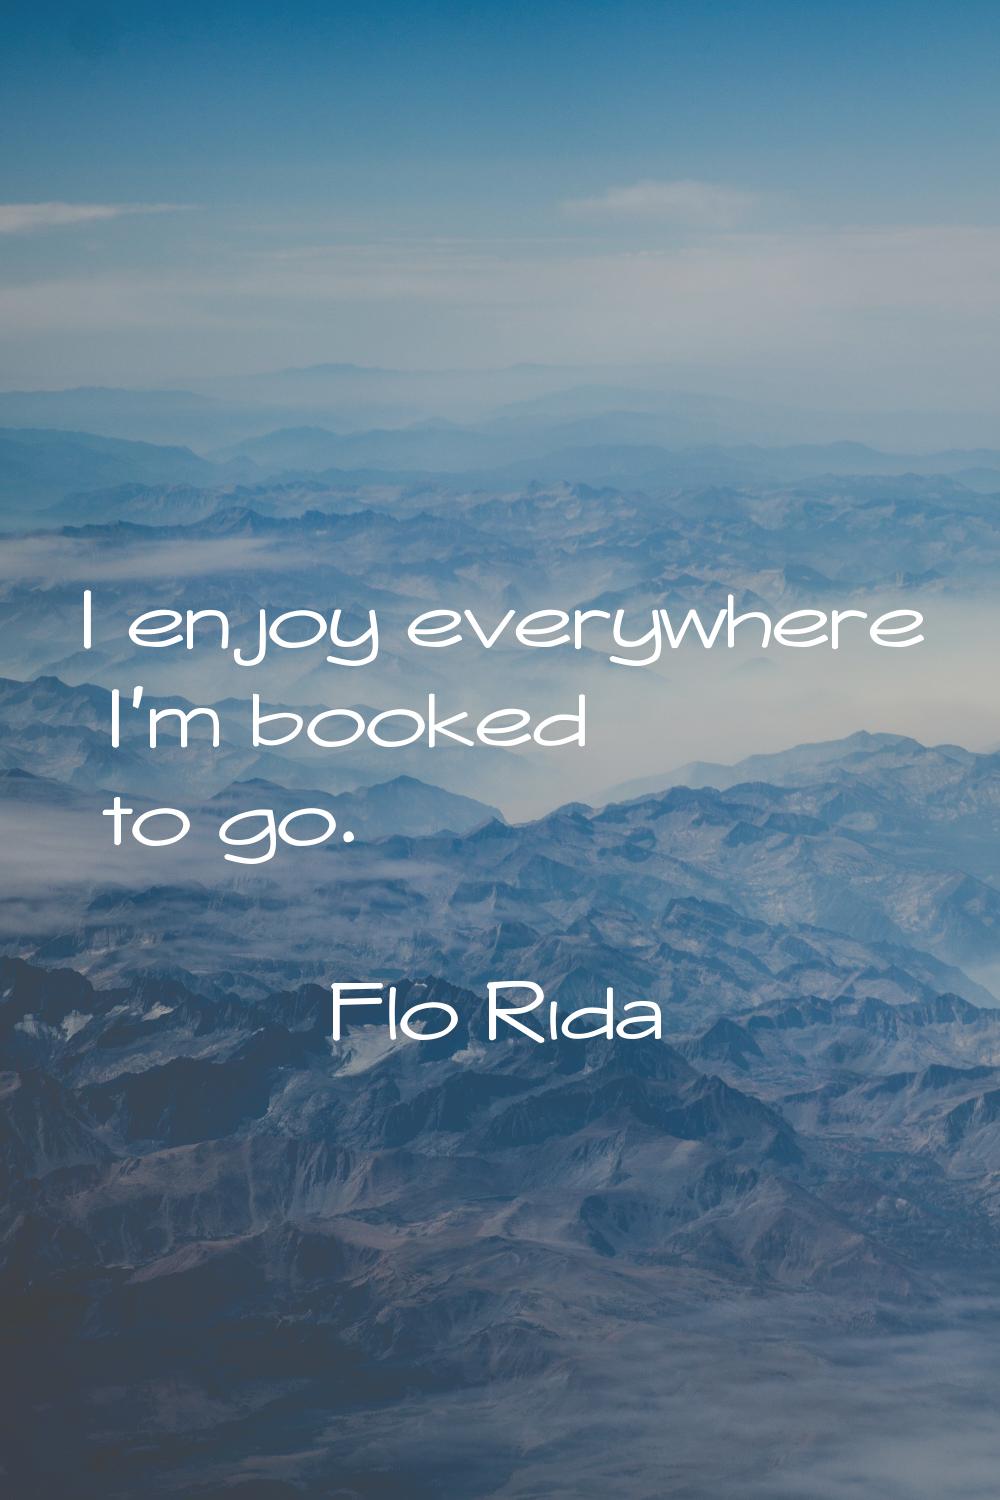 I enjoy everywhere I'm booked to go.